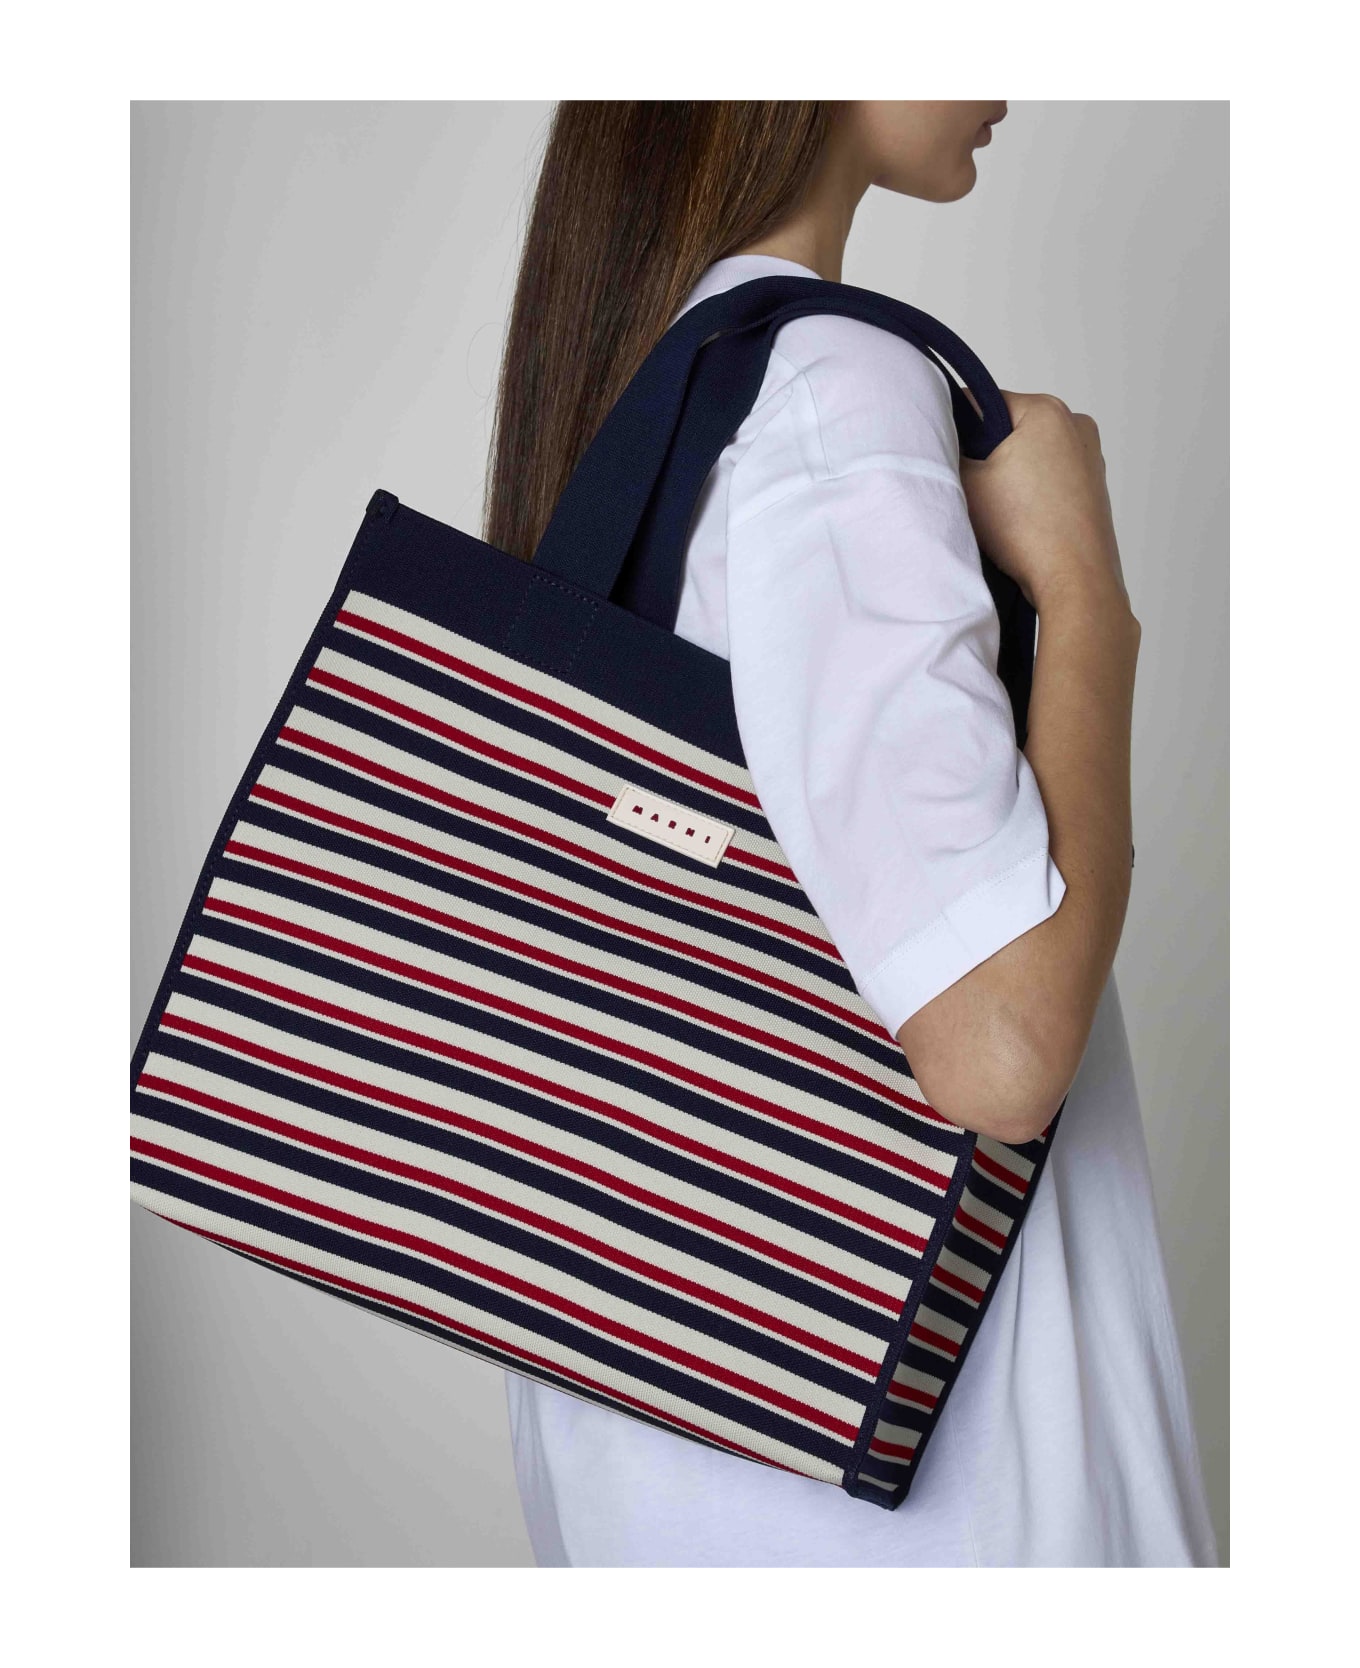 Marni Striped Canvas Medium Shopping Bag - Marine/ivory/red トートバッグ